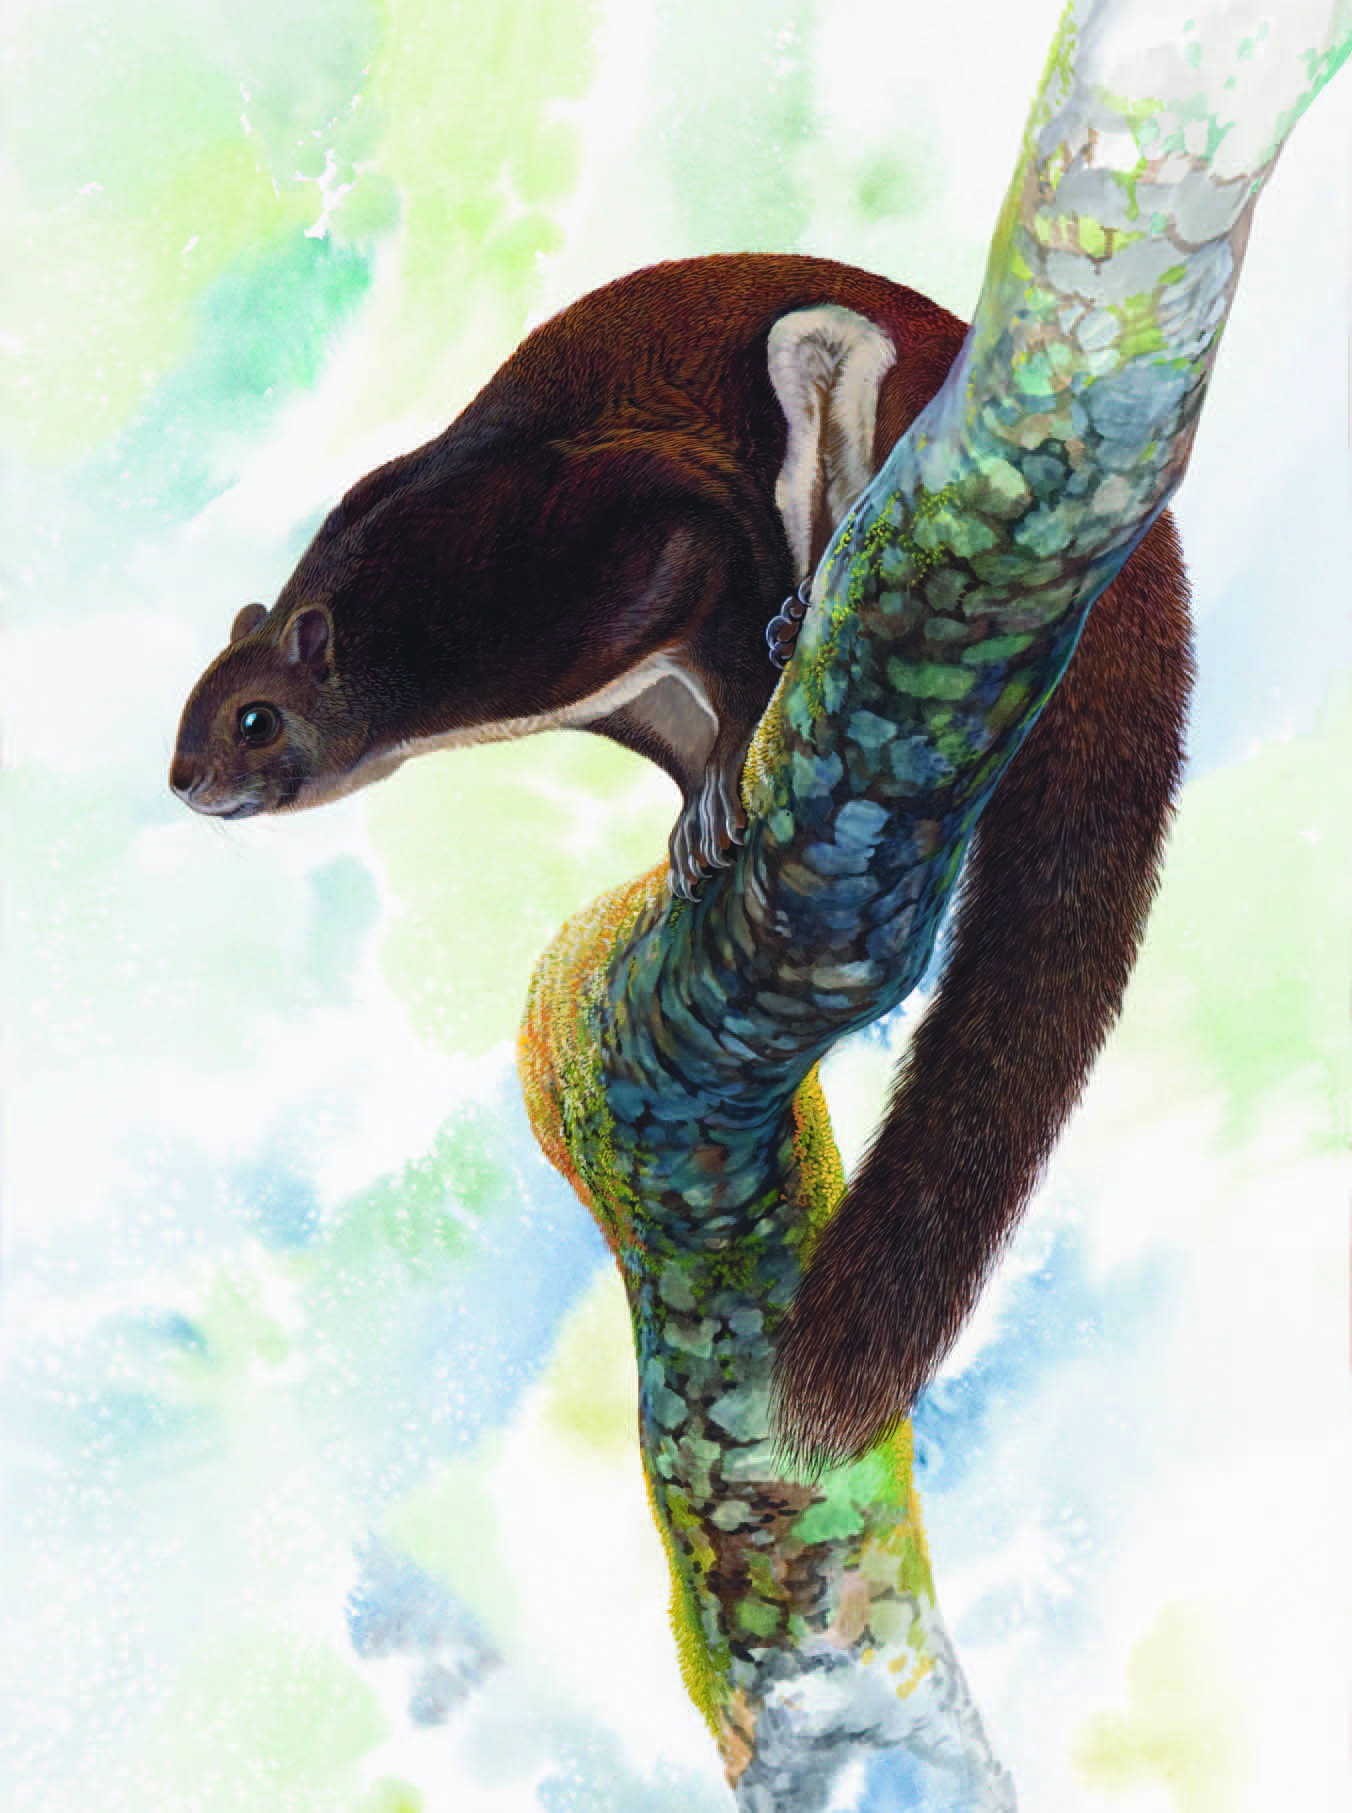 Yunnan Giant Flying Squirrel / Petaurista yunanensis